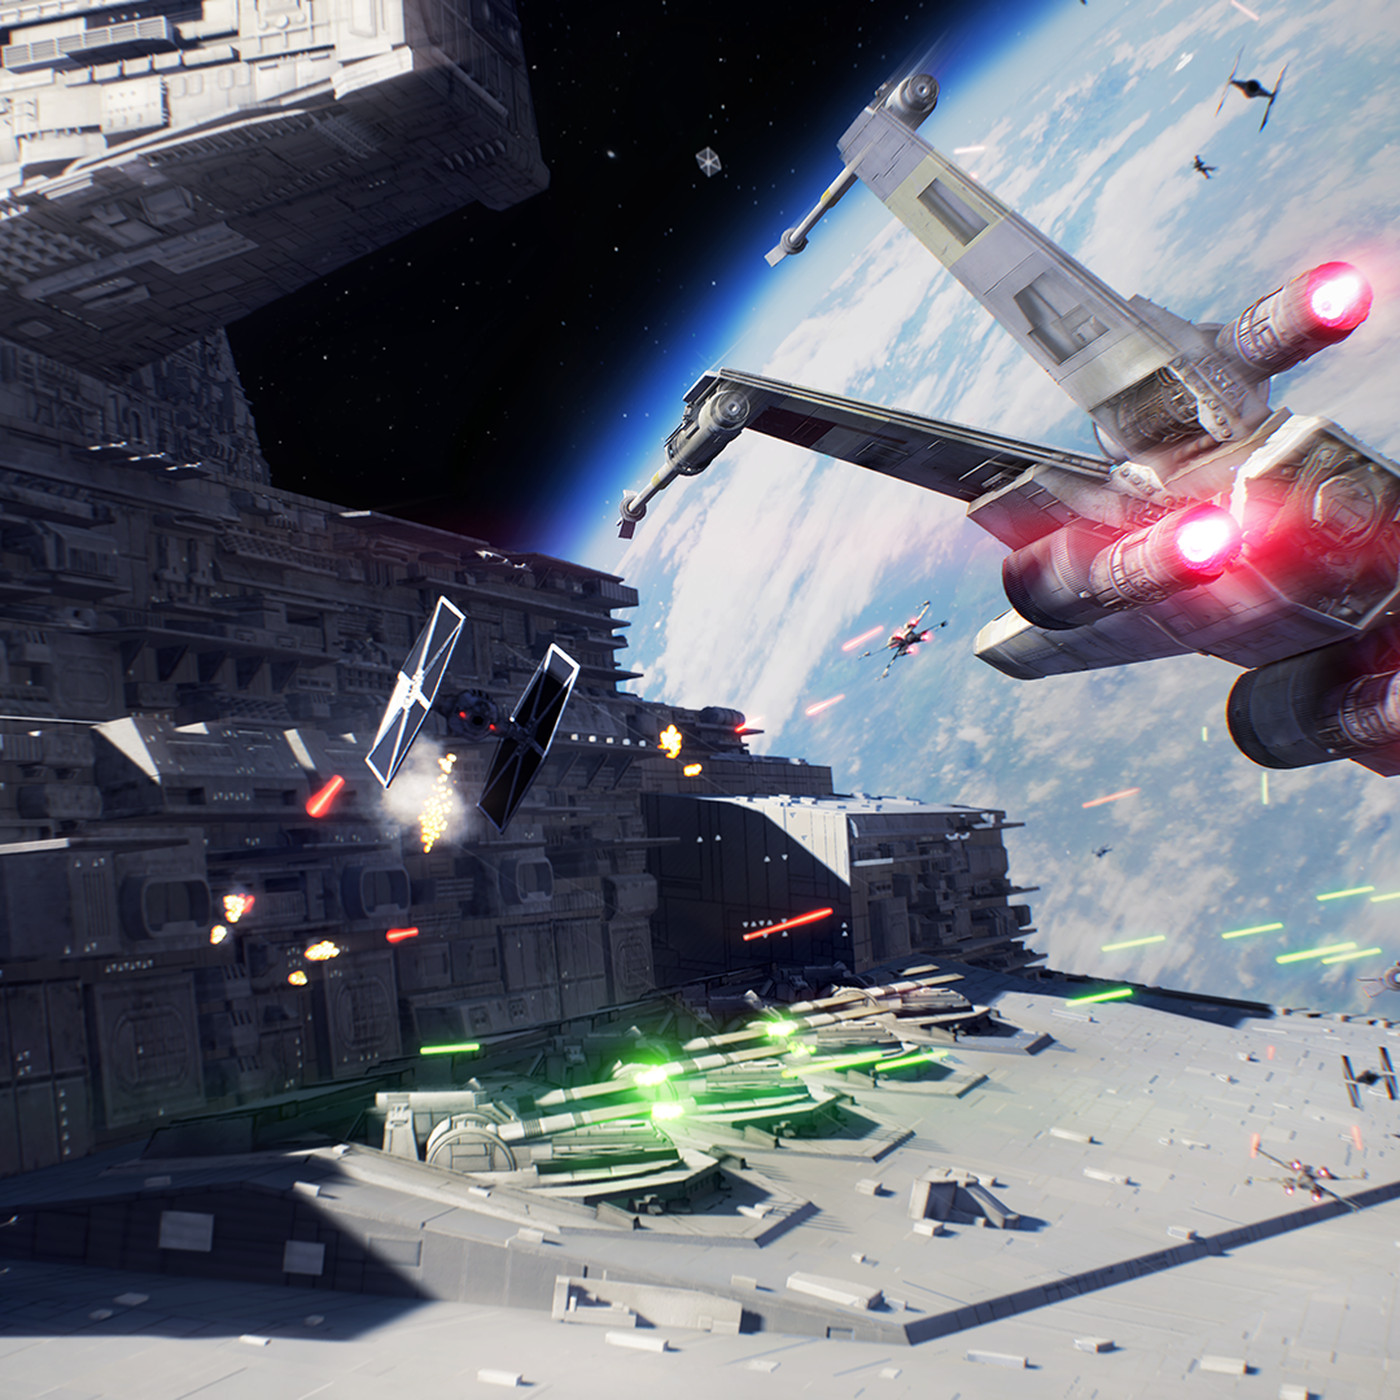 Star Wars Battlefront 2's starfighters have been completely overhauled